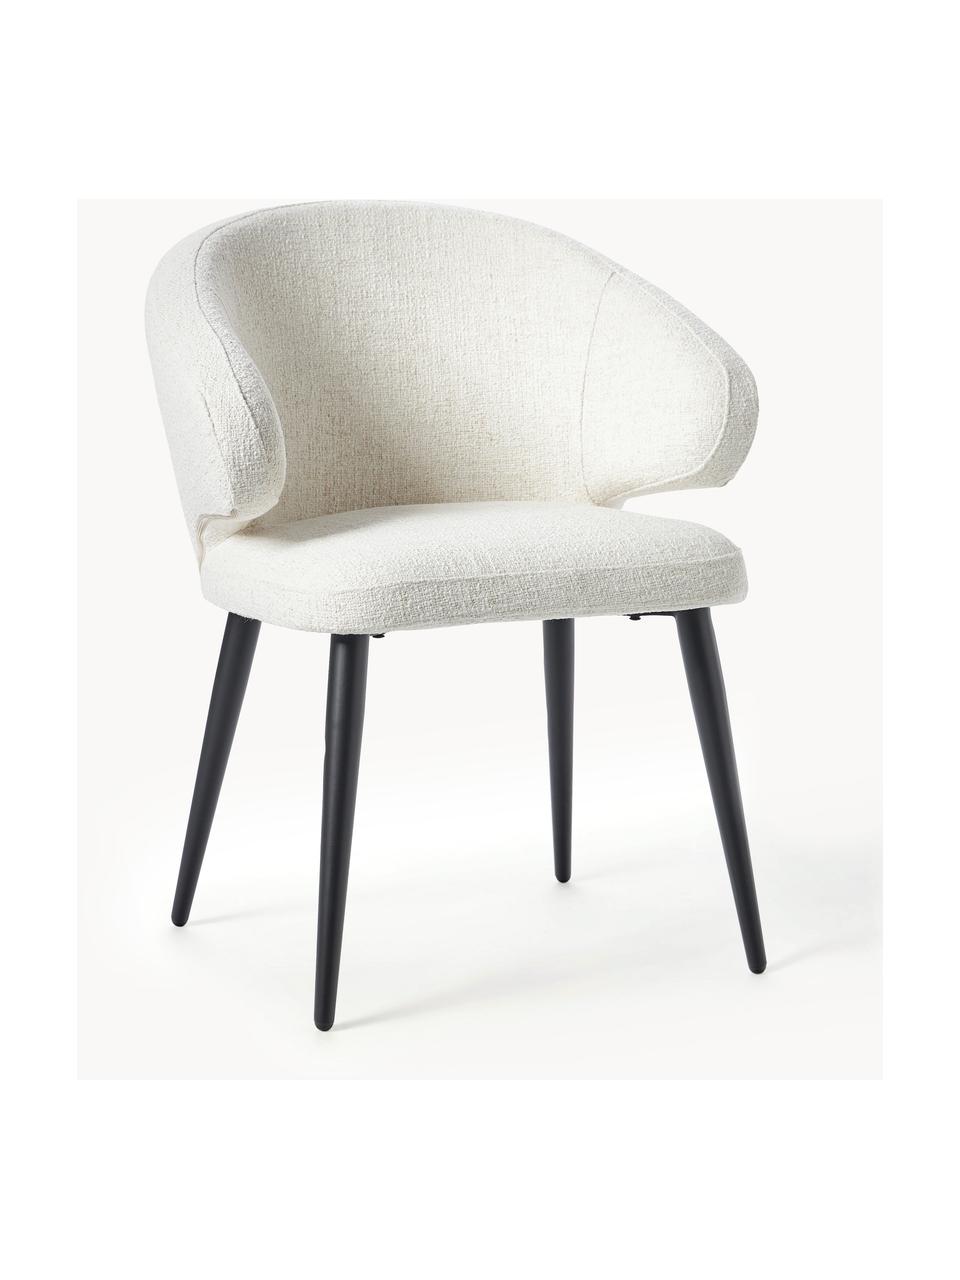 Bouclé židle s područkami Celia, Krémově bílá, Š 60 cm, H 62 cm